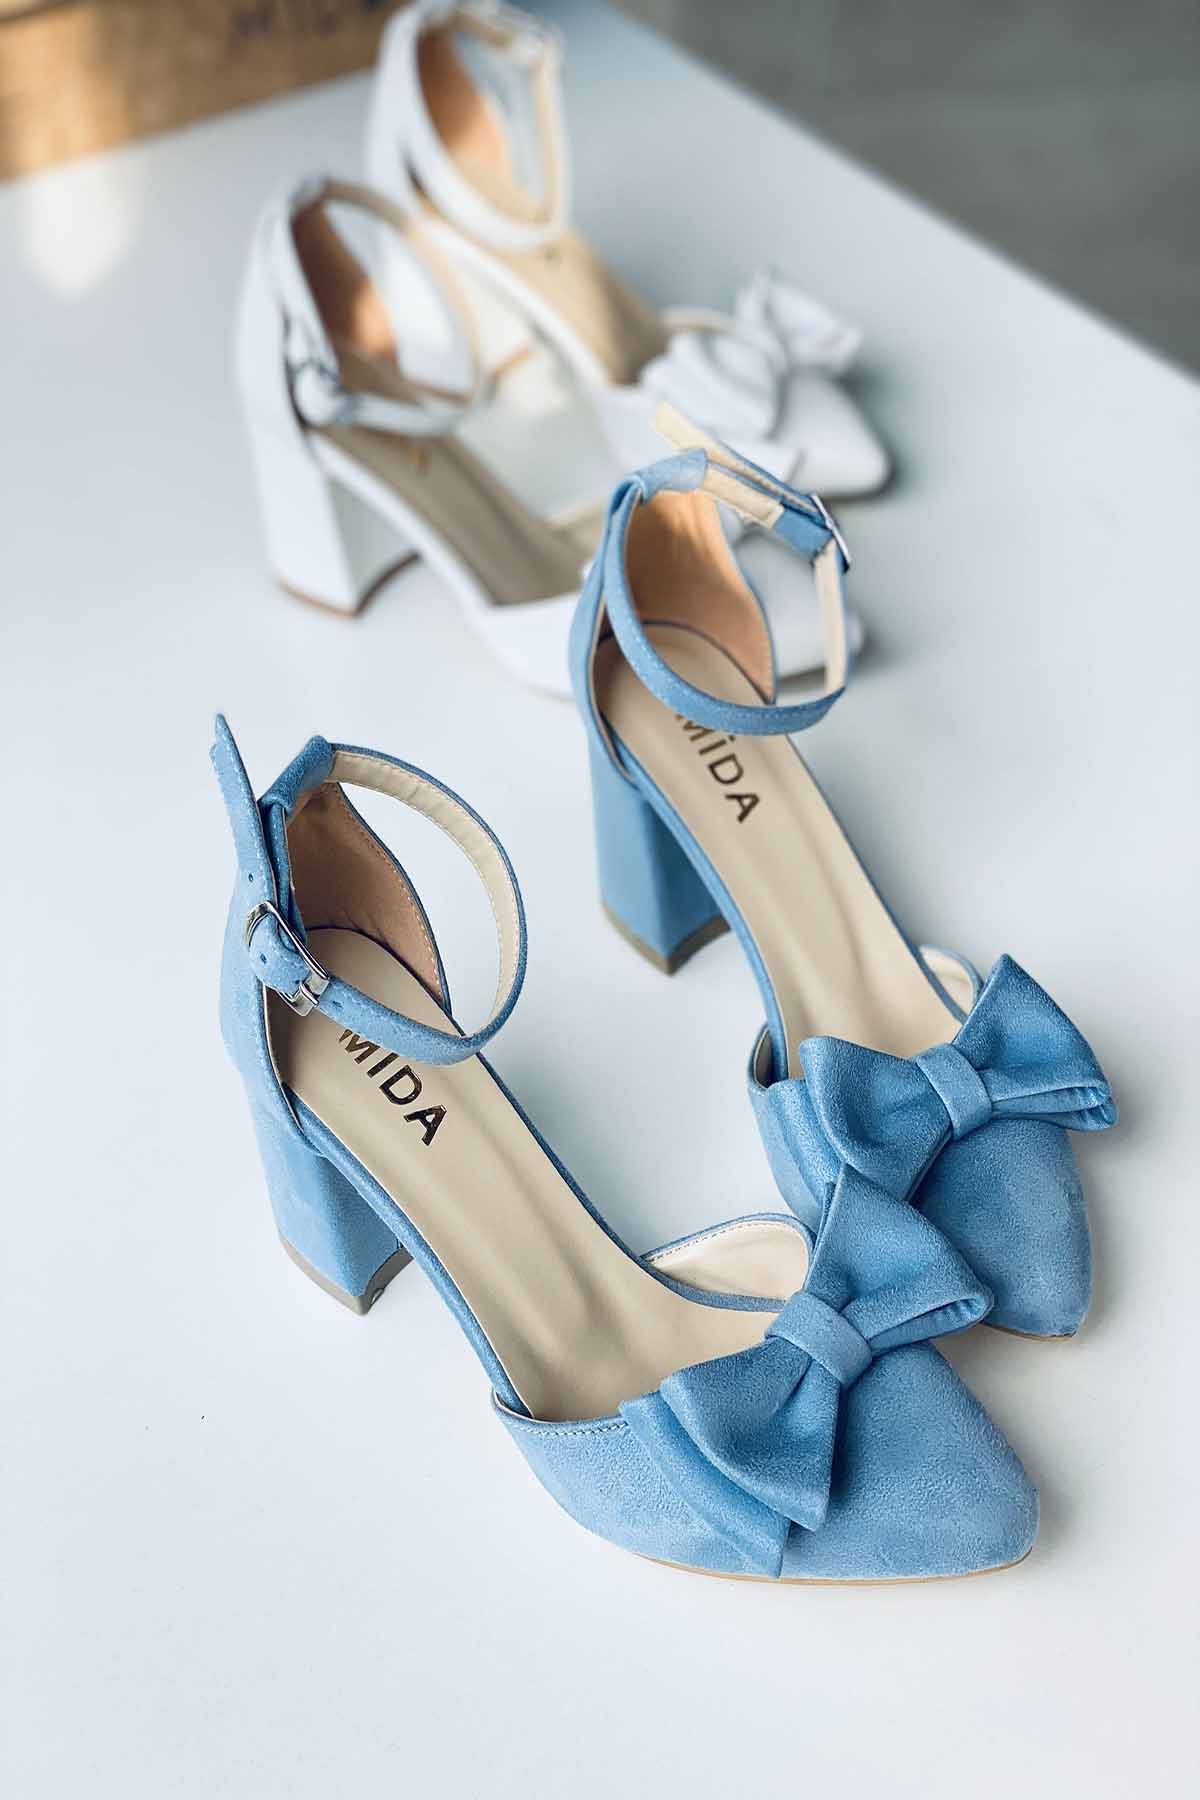 Mida Shoes Y107 Bebe Mavi Süet Topuklu Ayakkabı